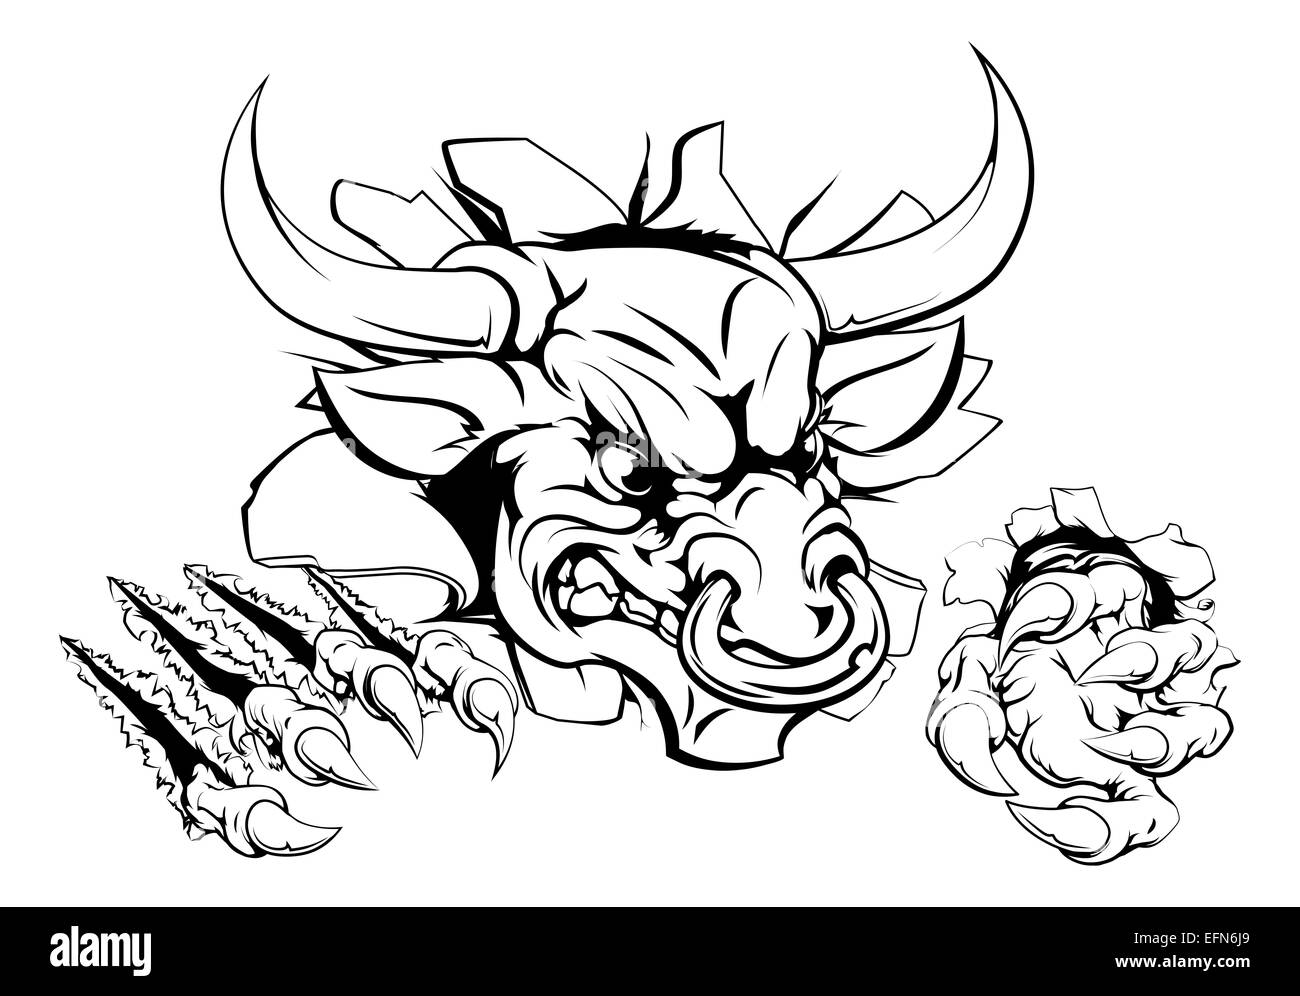 Bull or Minotaur monster smashing through wall and tearing it apart Stock Photo